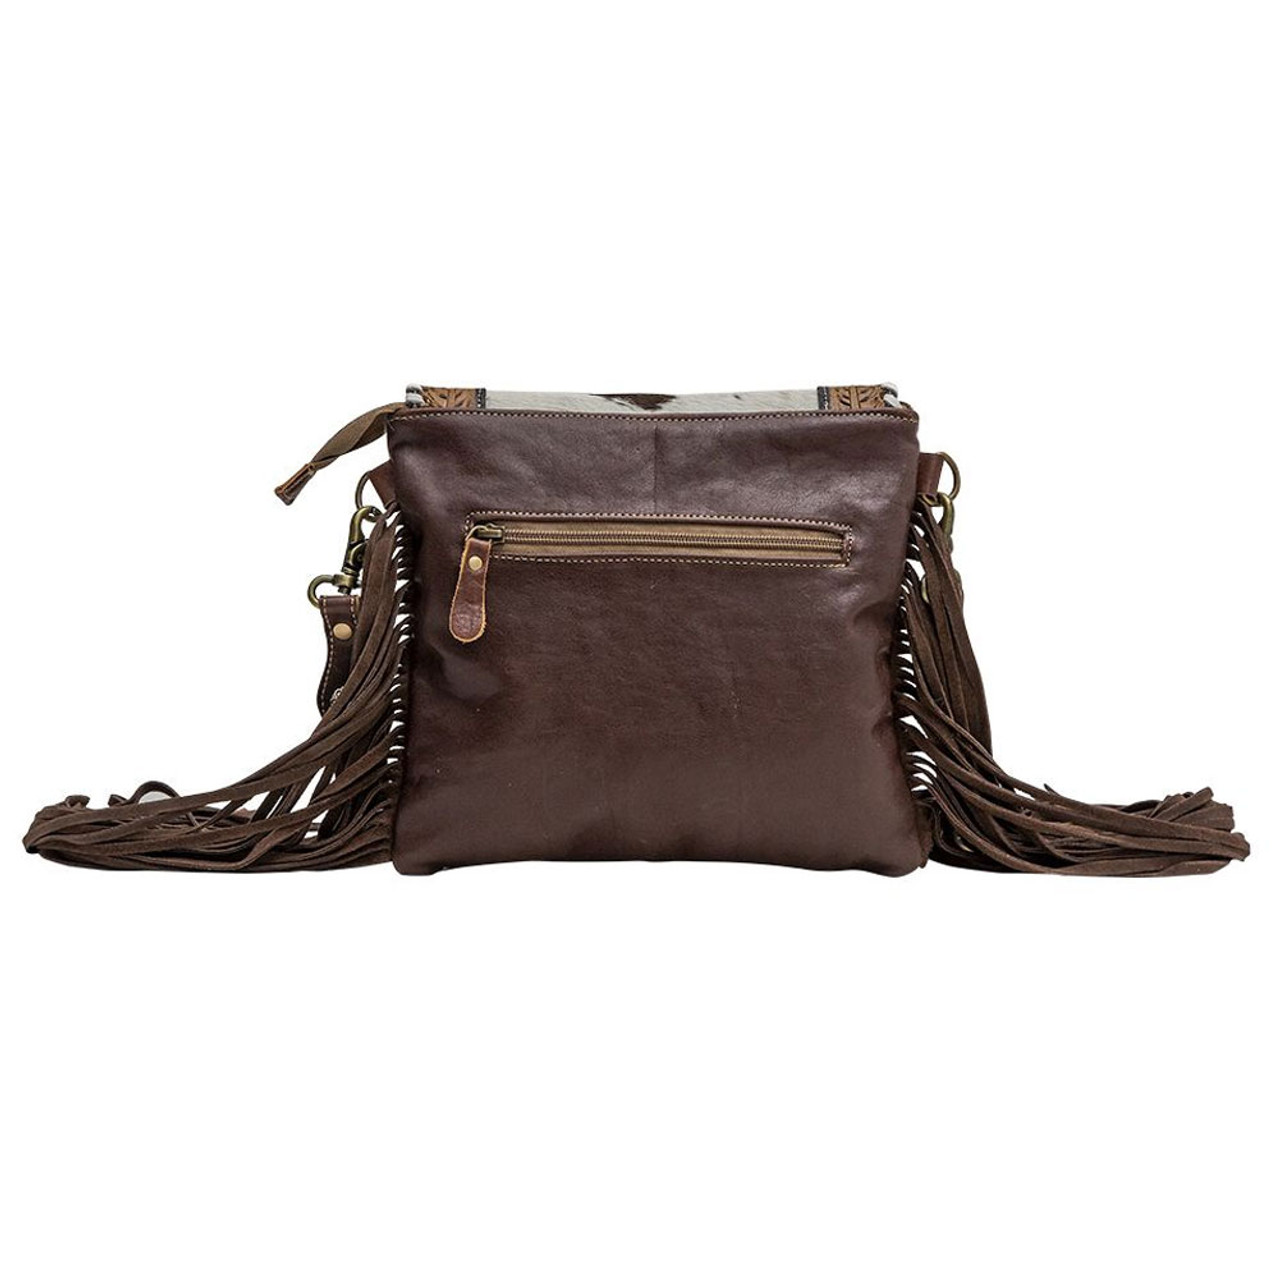 ESTELLA BARTLETT Loman Faux Leather Saddle Bag, $89